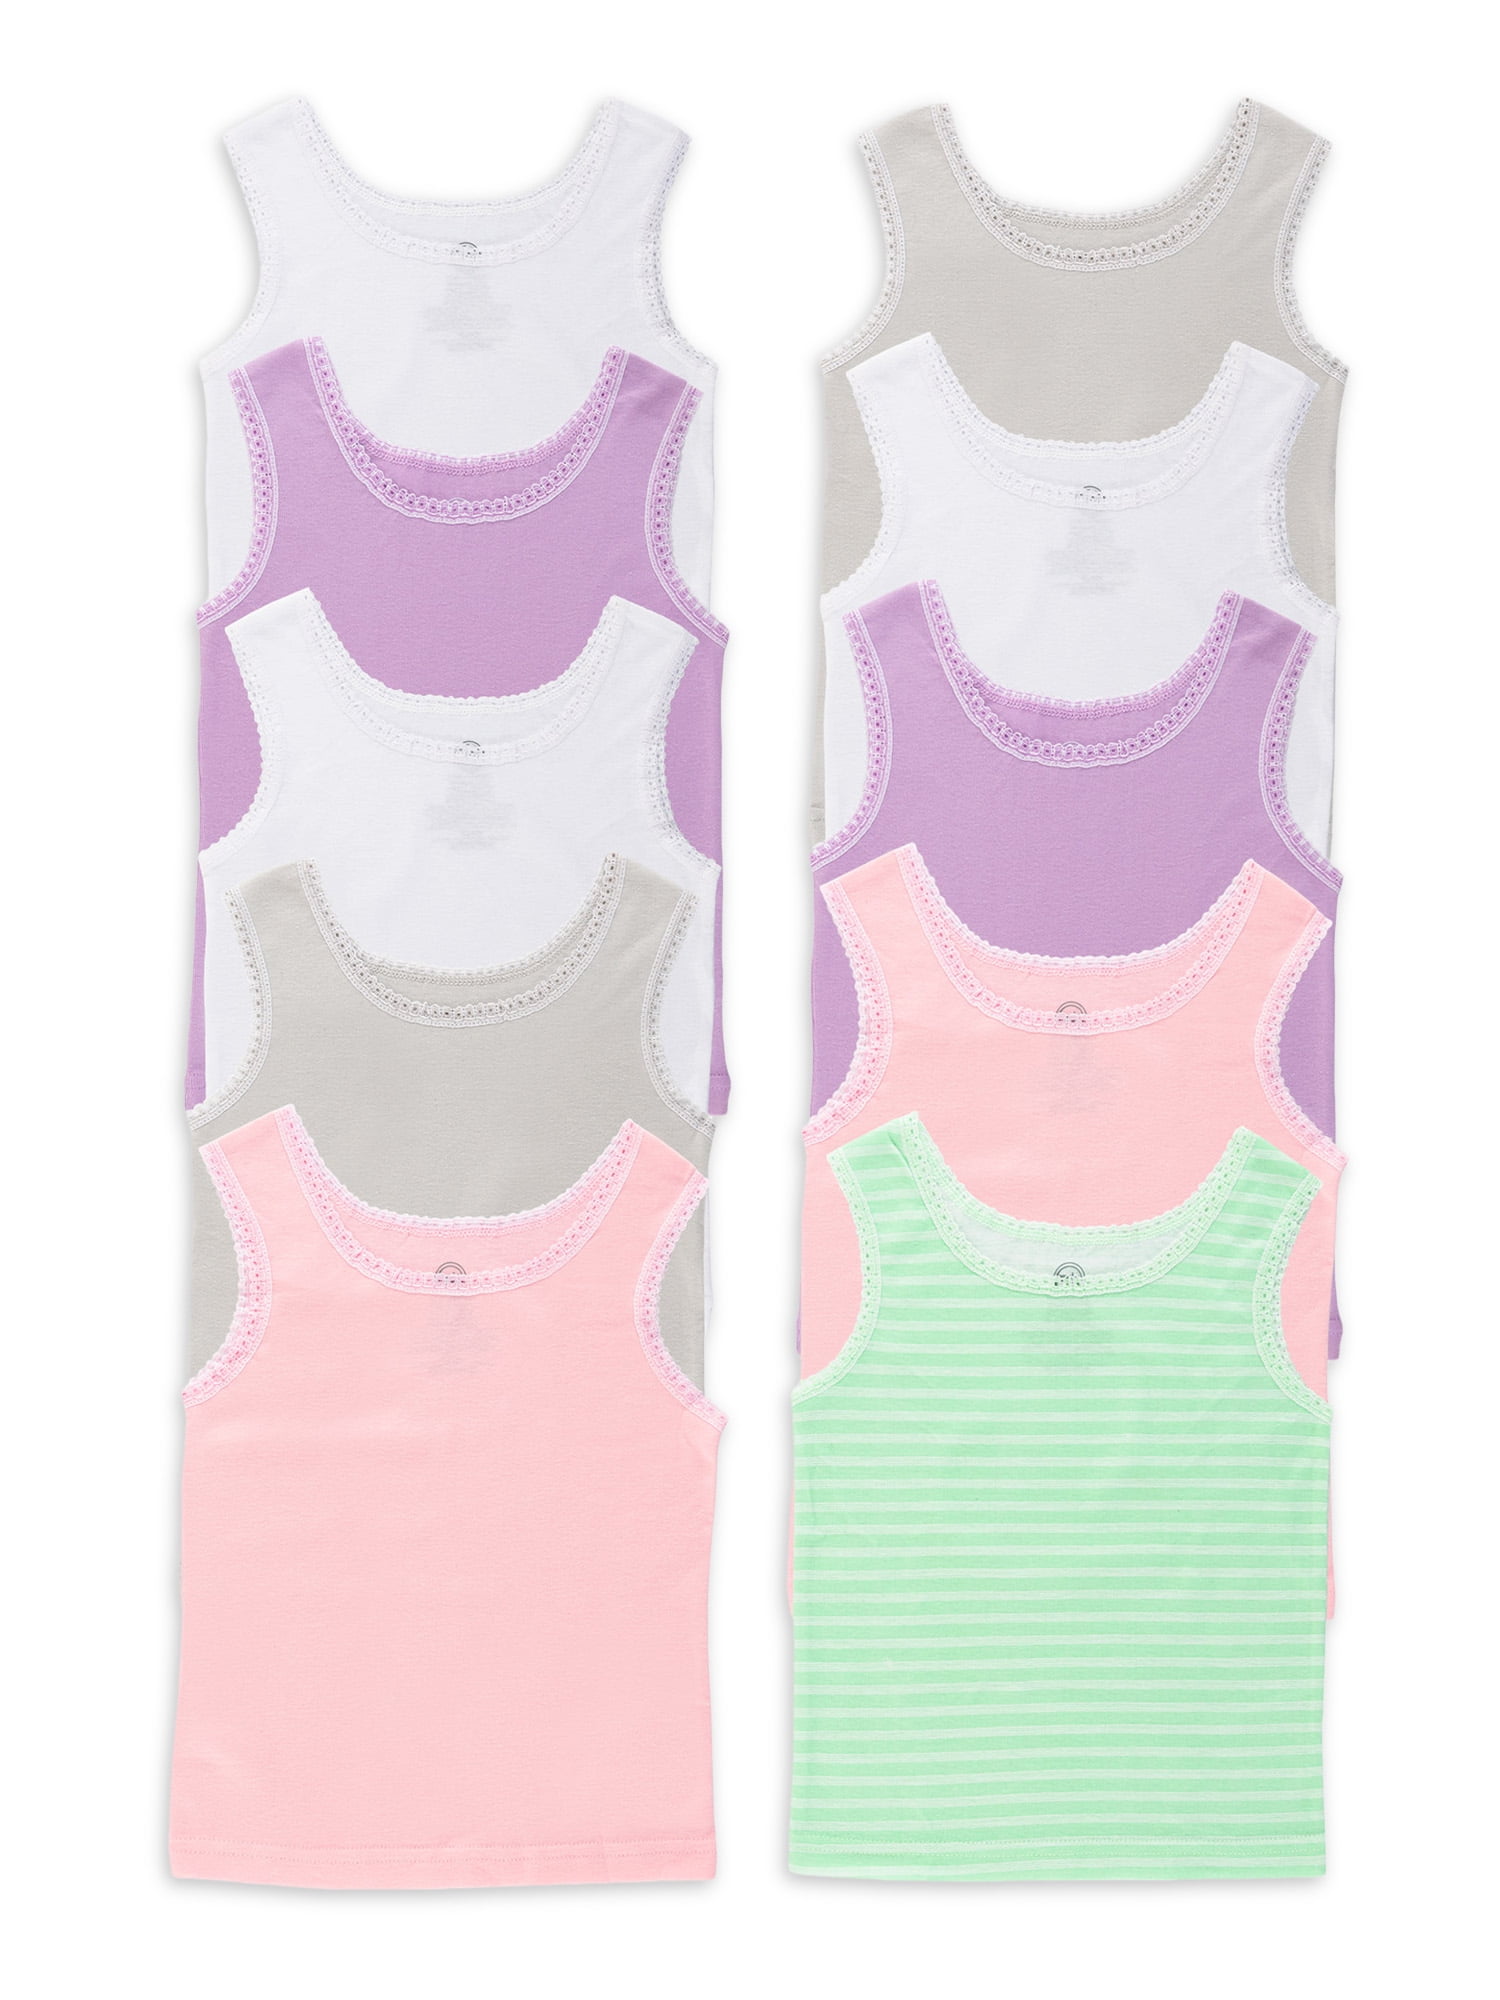 ORGANICKID Girls Tagless GOTS Certified Organic Cotton Undershirts Tanks Toddler Camisoles 3-Pack 